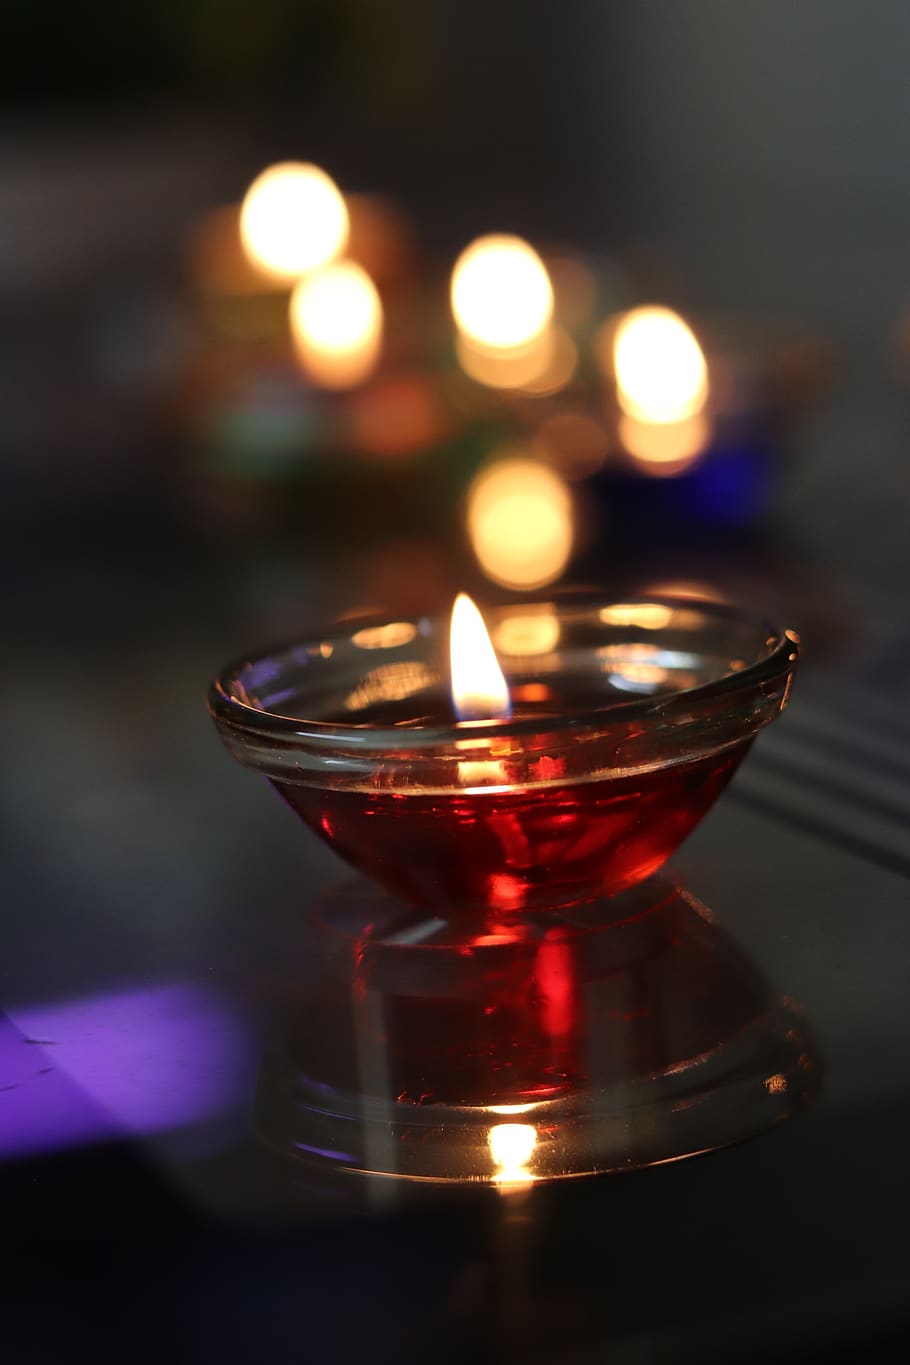 diwali, candle, candlelight, candle design, flame, fire, burning, illuminated, heat - temperature, close-up